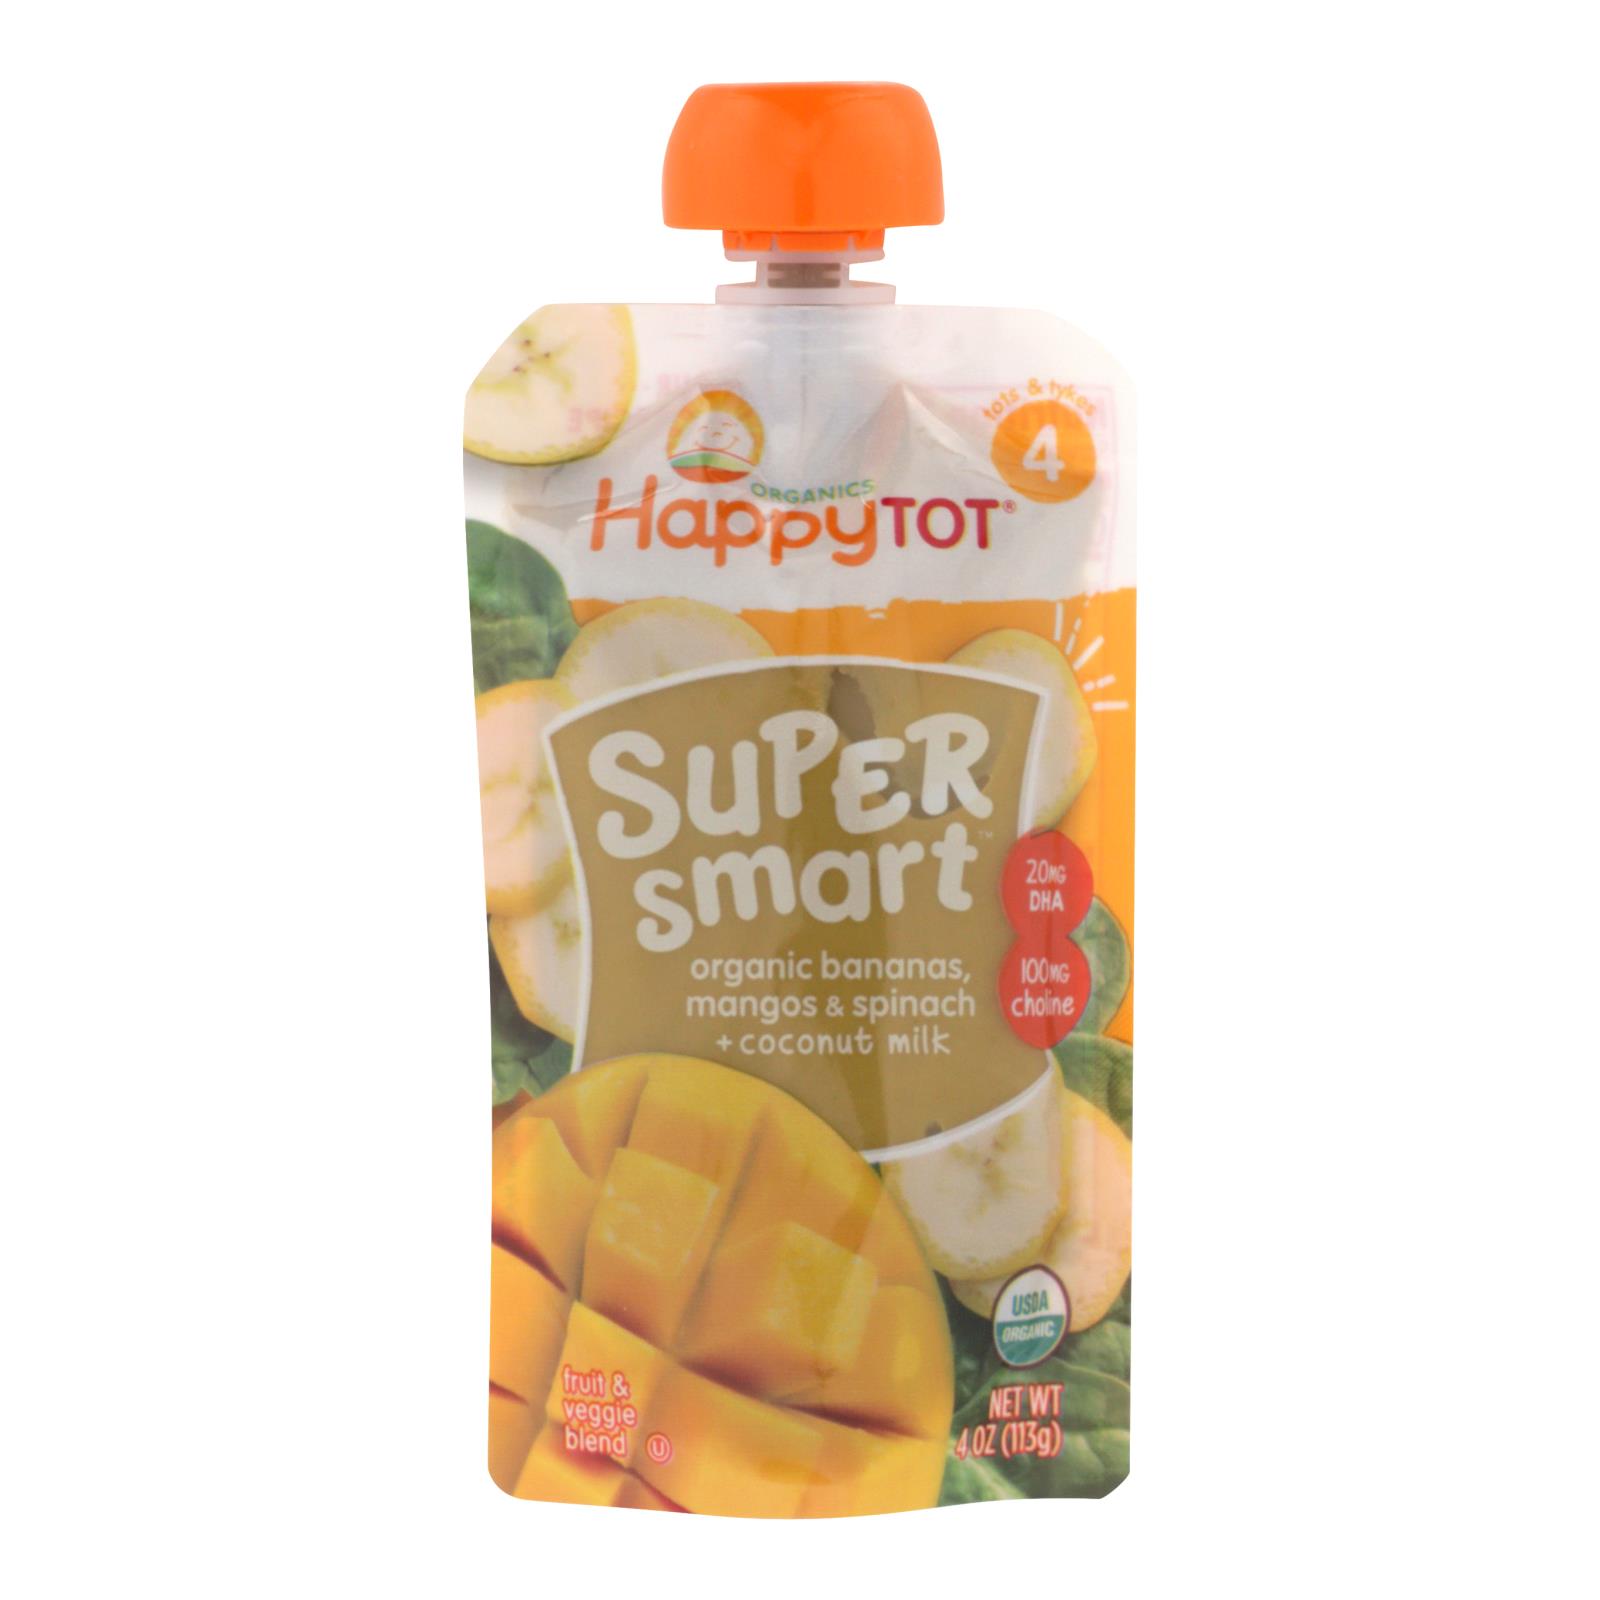 Happy Tot Super Smart Organic Bananas, Mangos, & Spinach + Coconut Milk - 16개 묶음상품 - 4 0Z